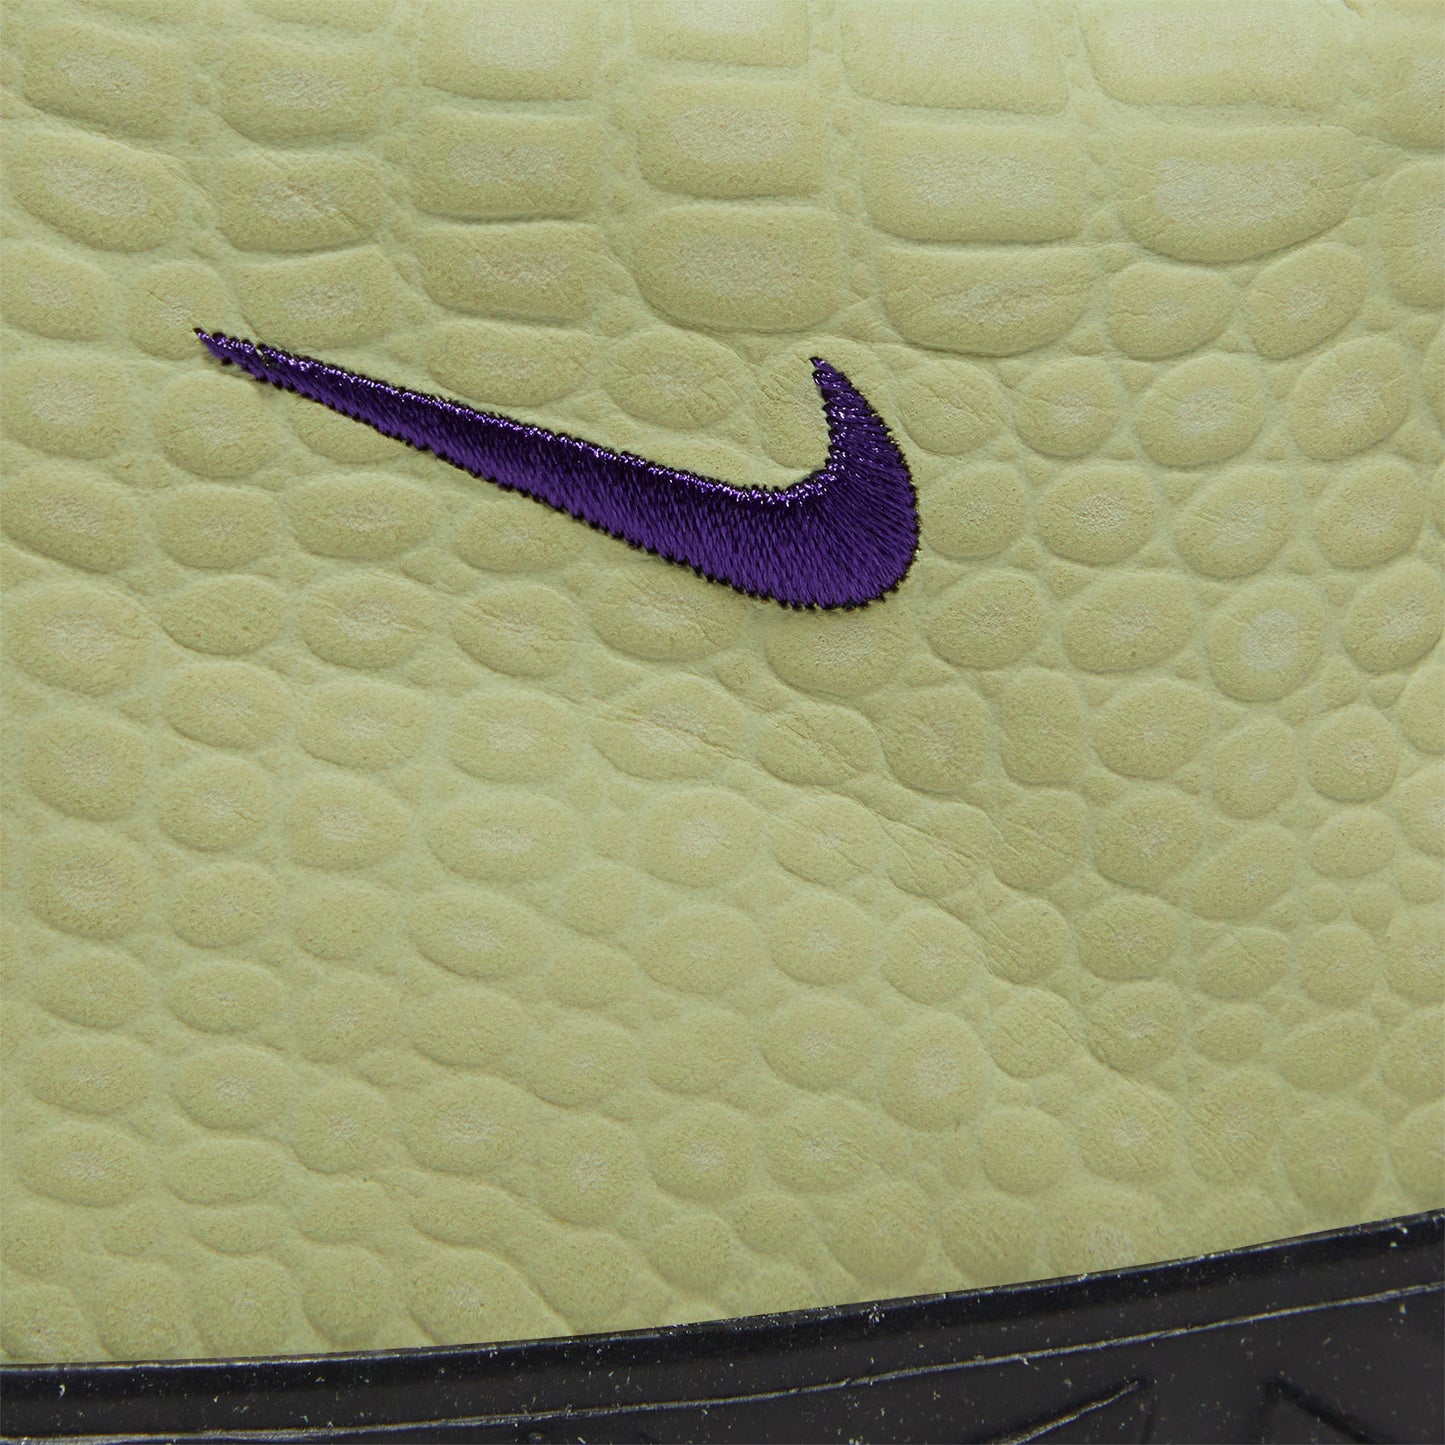 Nike ACG Moc Premium (Olive Aura/Field Purple/Black)